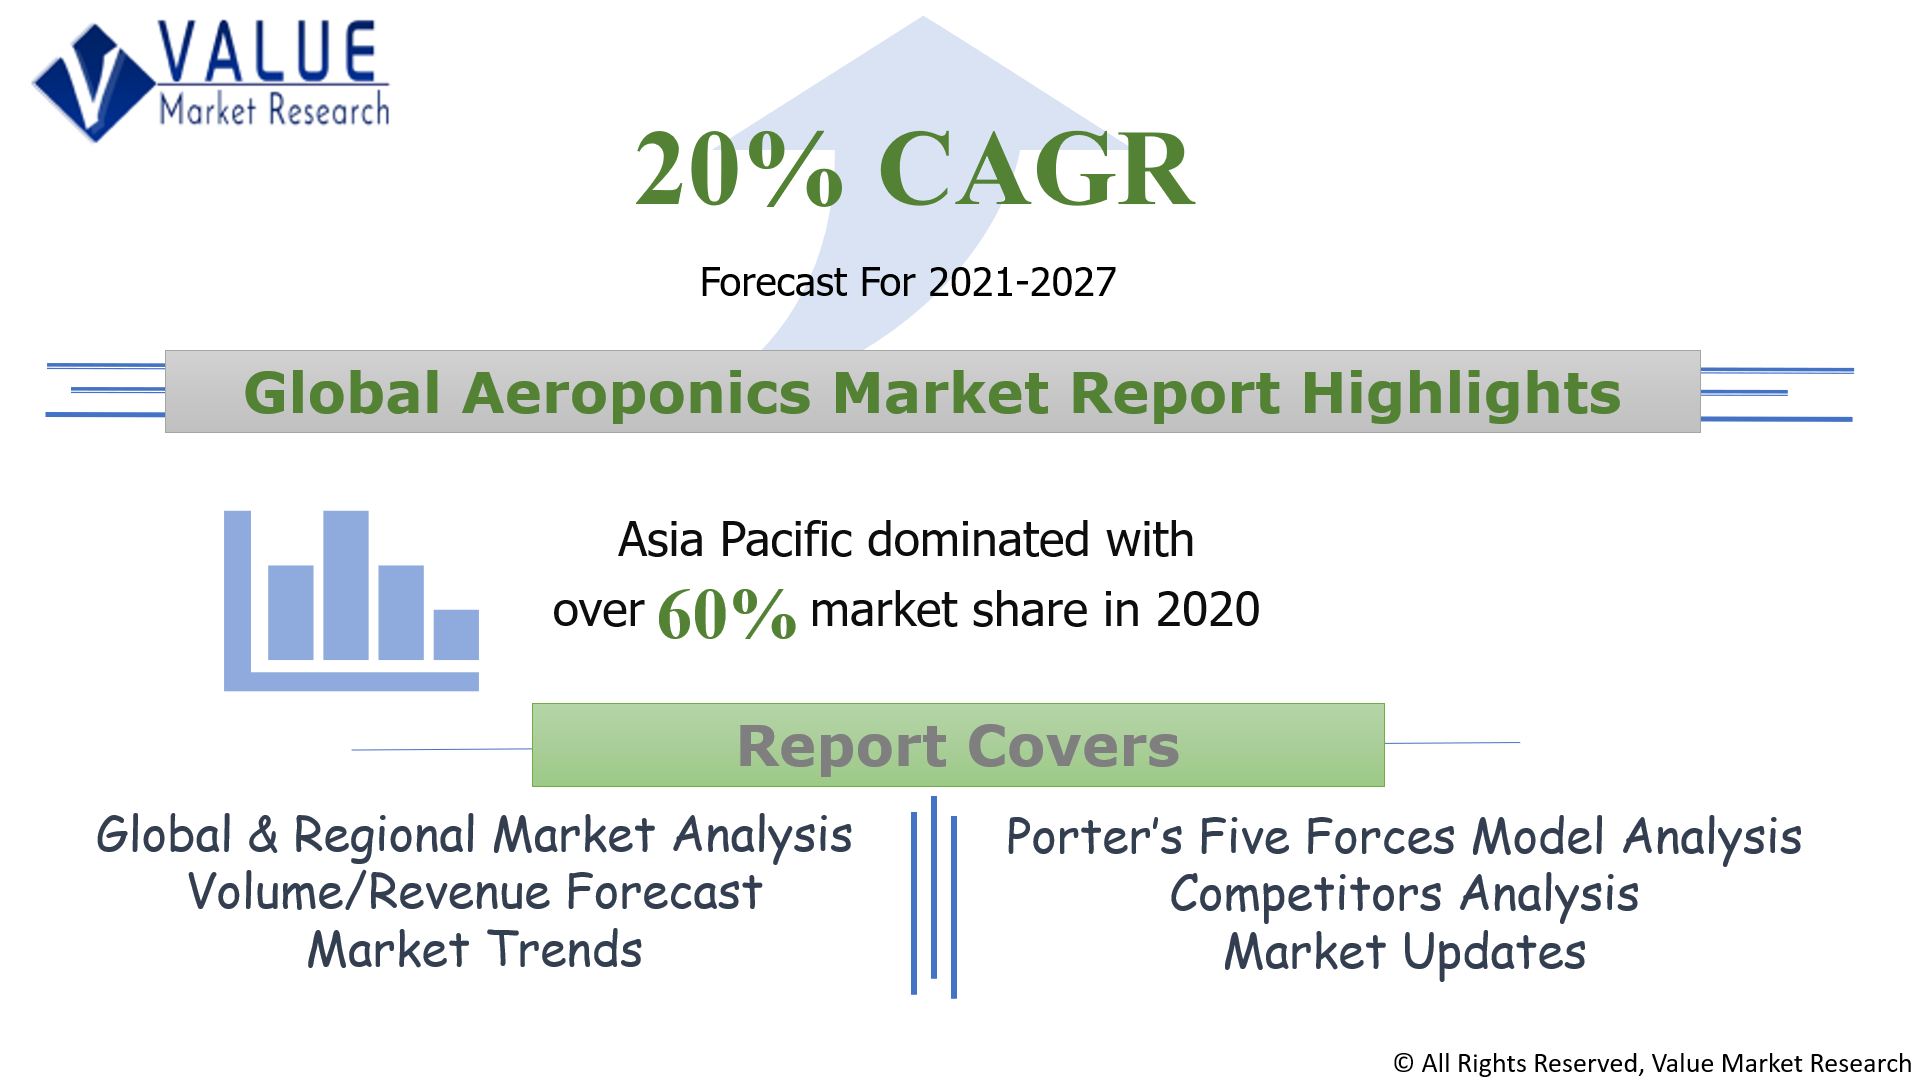 Global Aeroponics Market Share